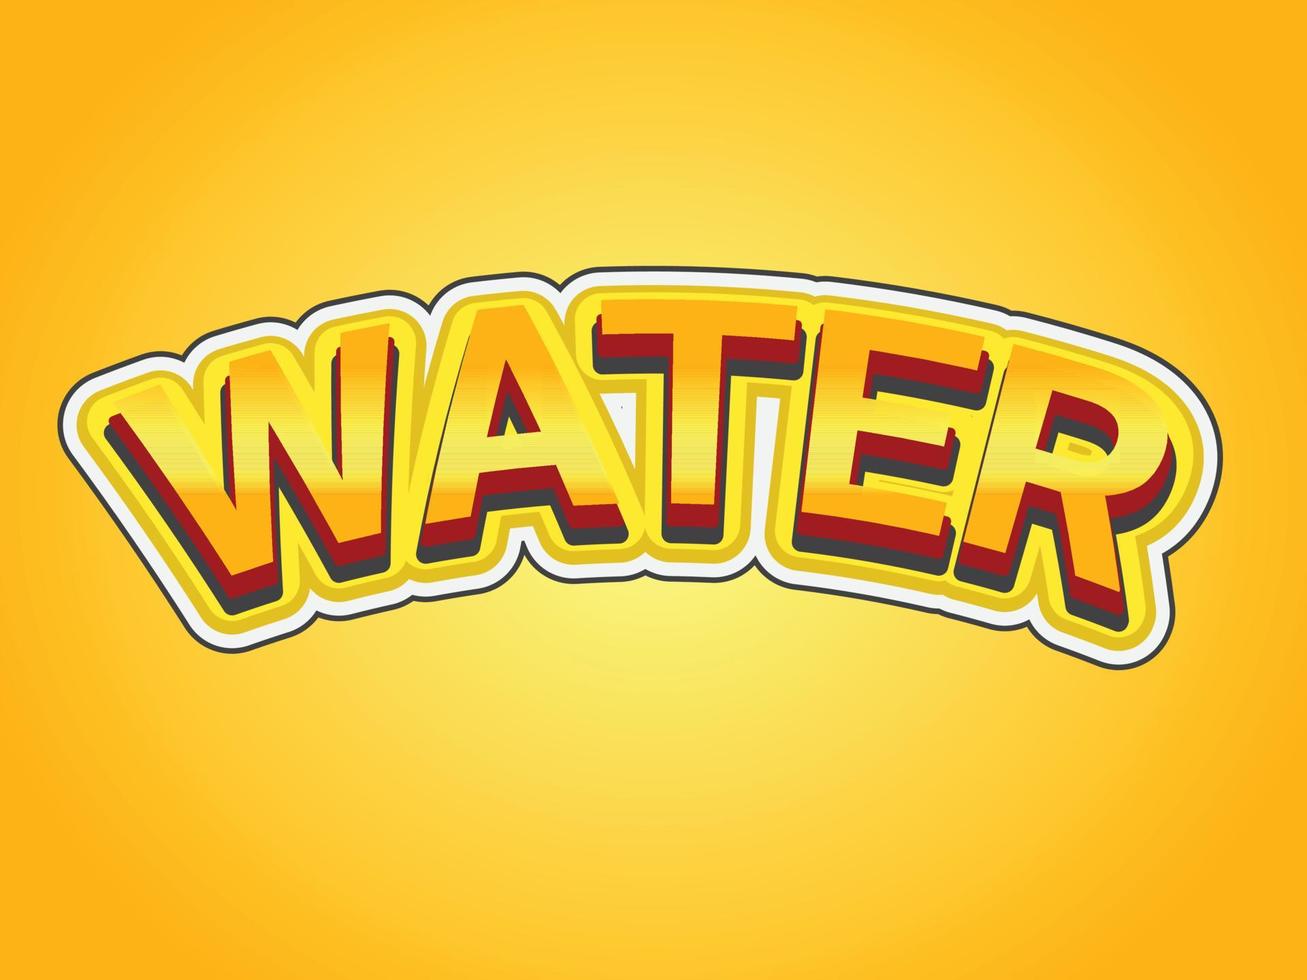 plantilla de efecto de texto de agua con uso de estilo en negrita 3d para logotipo vector